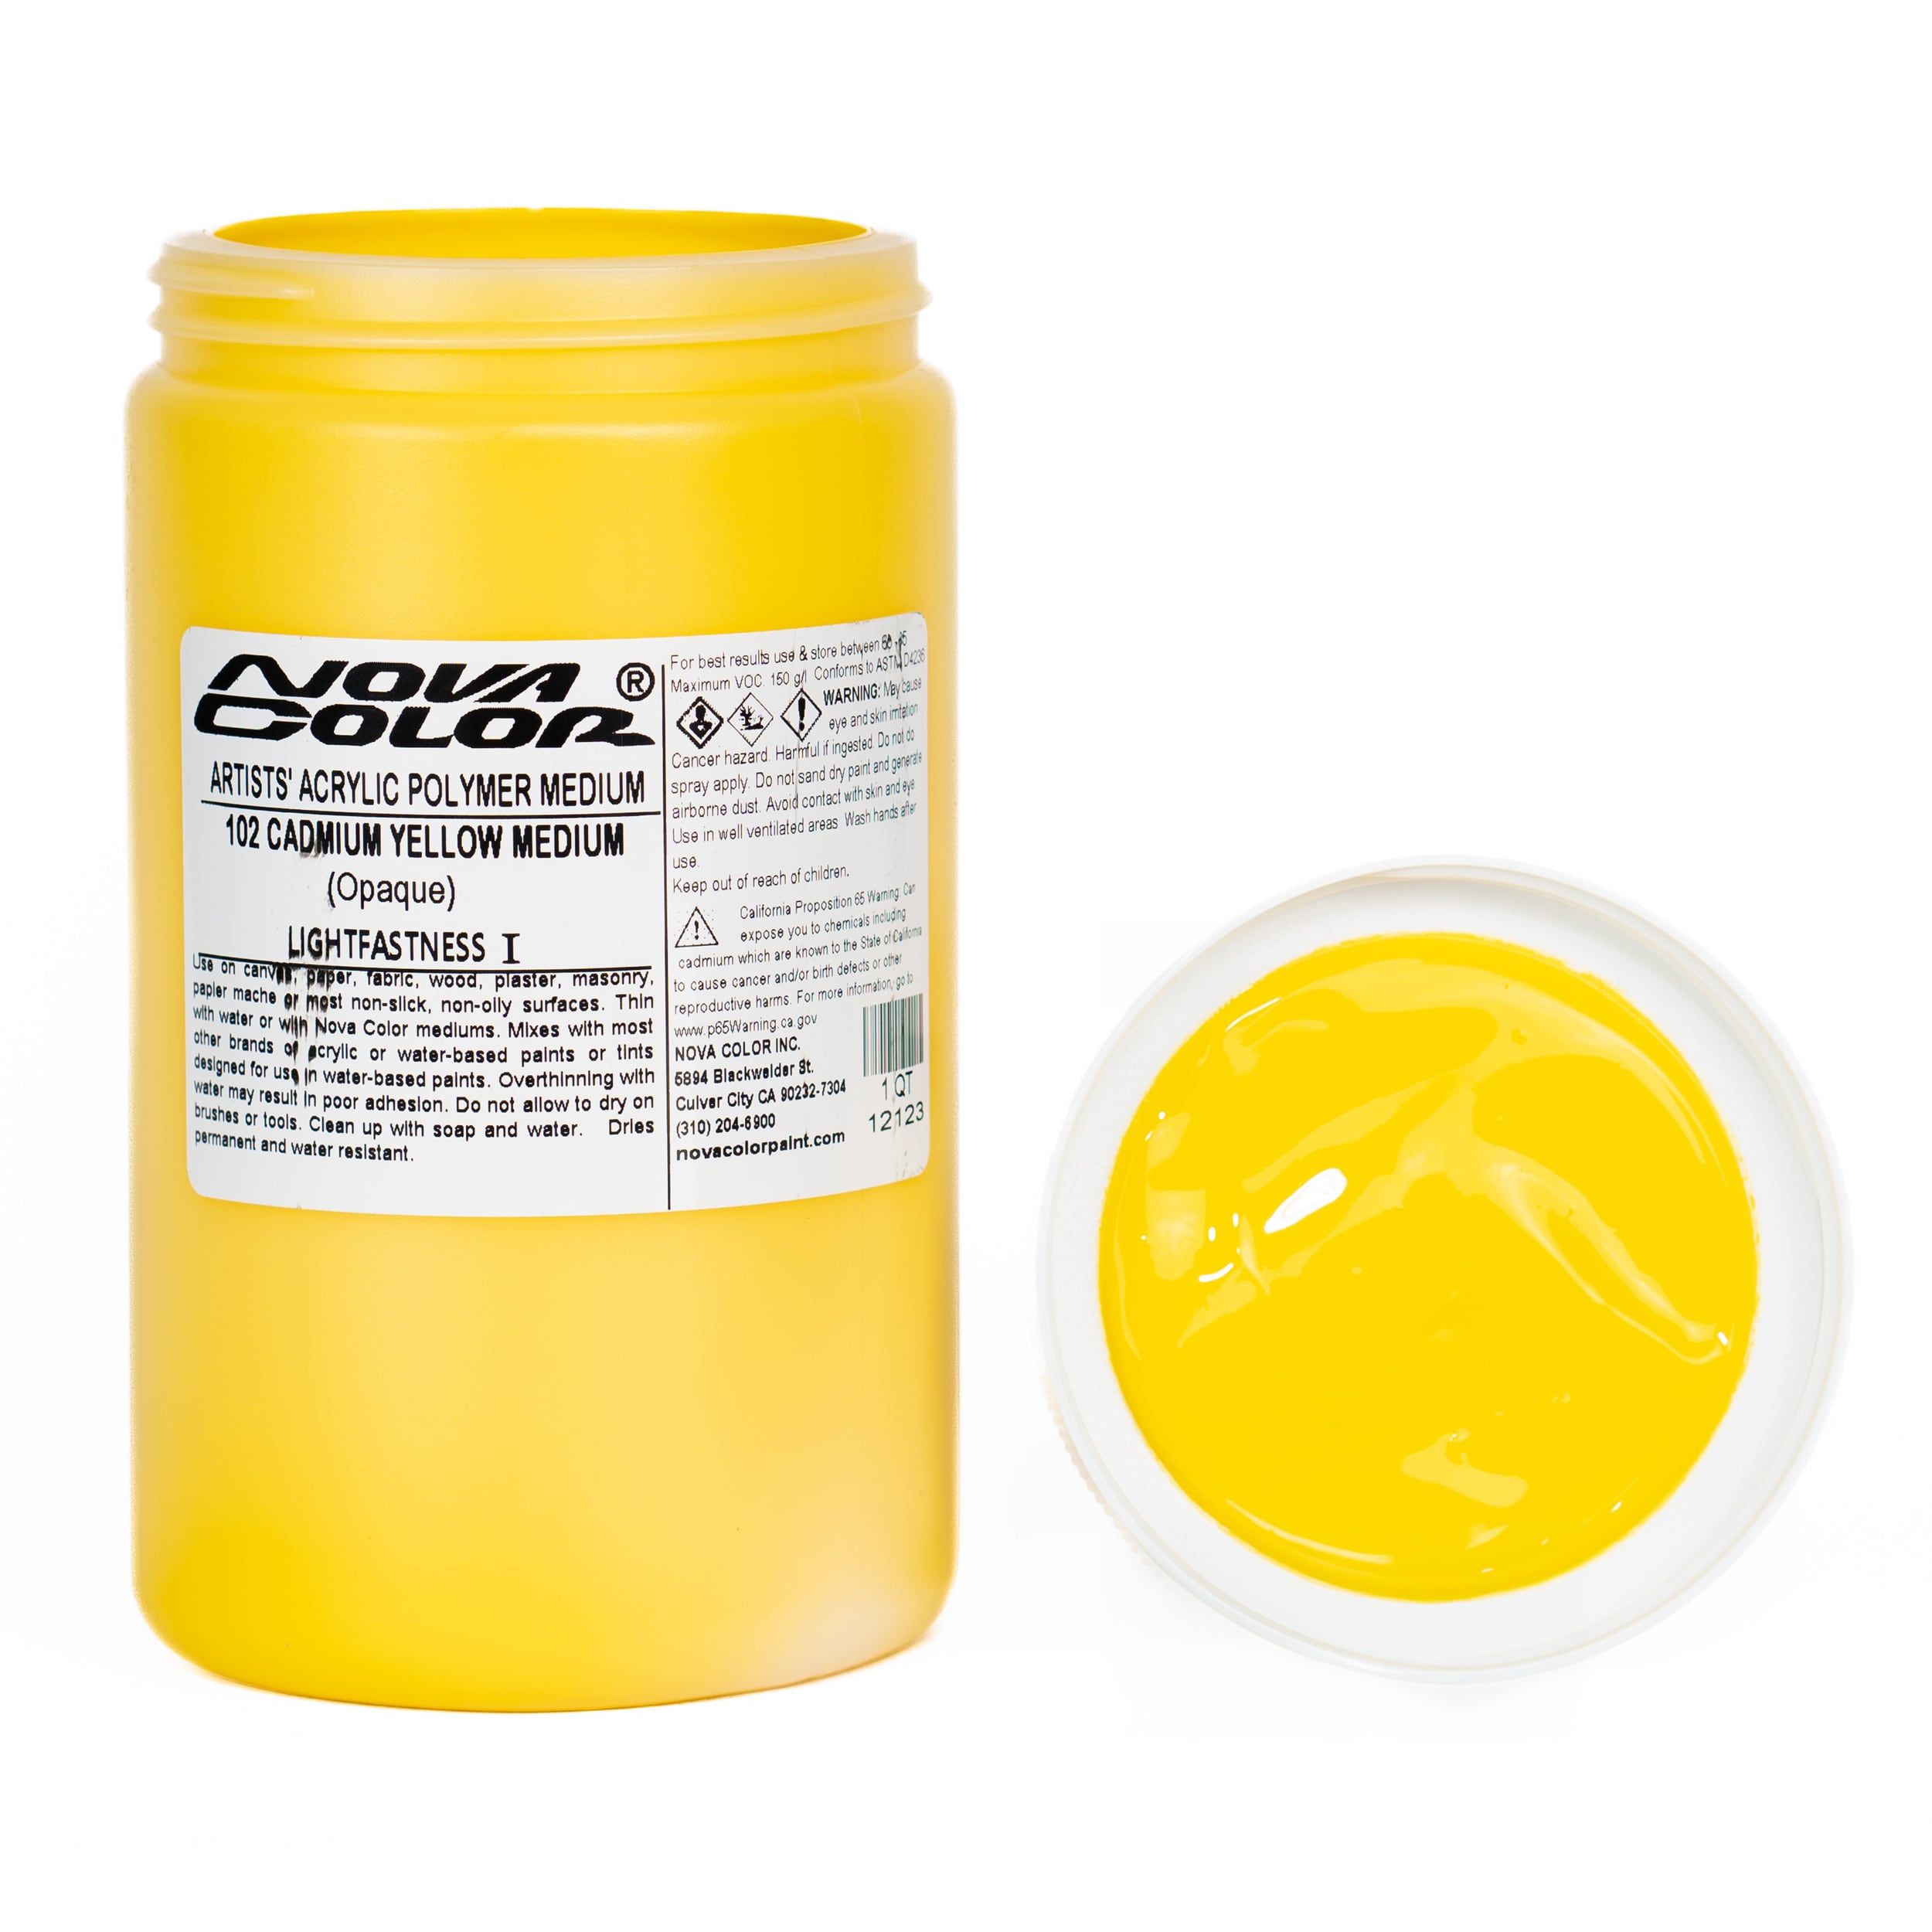 Buy #102 Cadmium Yellow Medium - Lightfastness